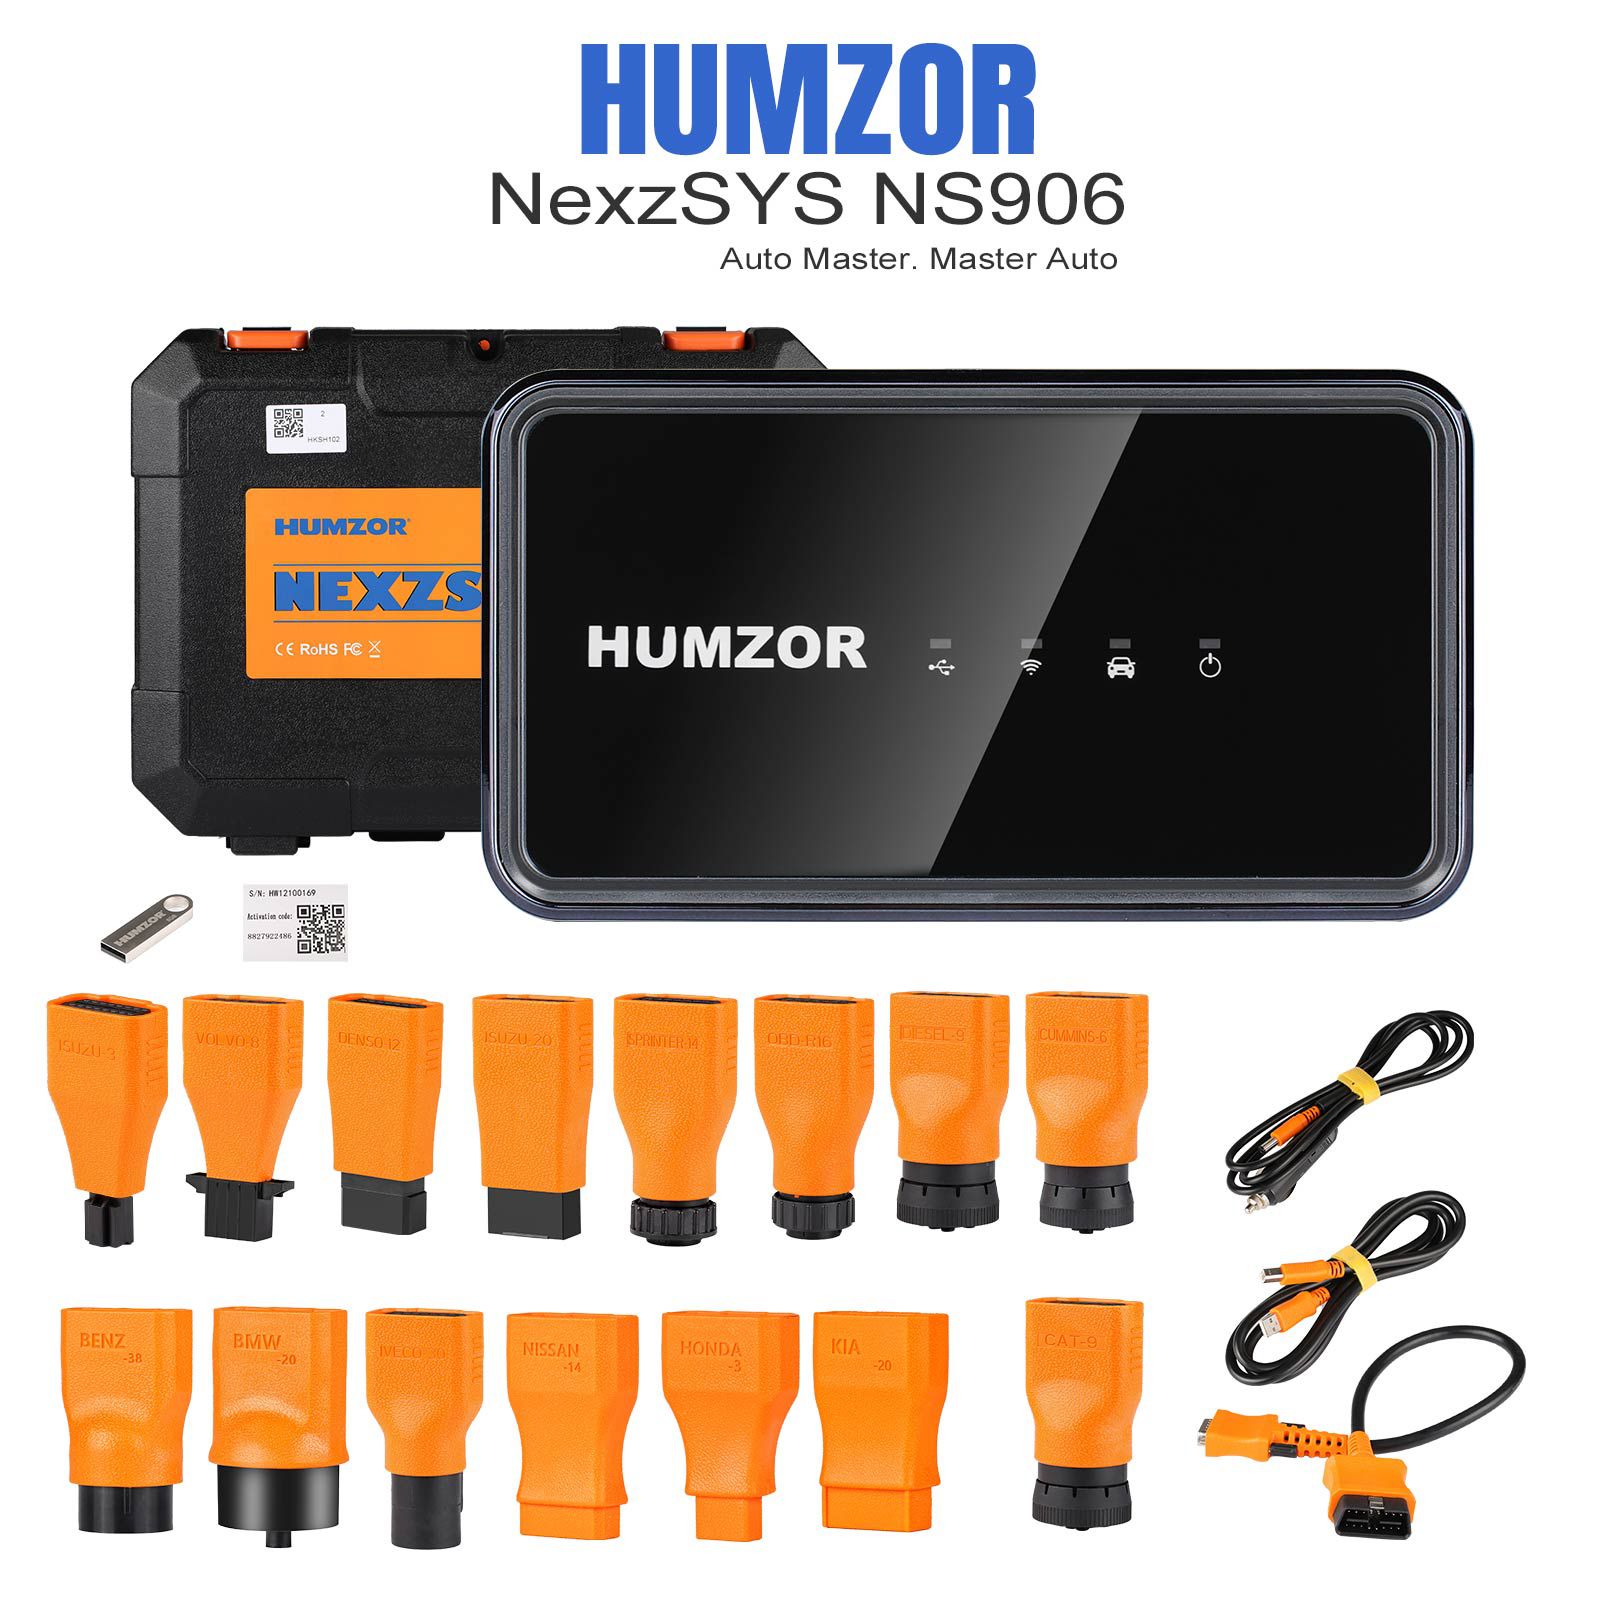 HUMZOR NexzSYS NS906 자동차 및 트럭 진단 도구는 Win7/8/10 시스템의 모든 시스템 진단을 지원합니다.